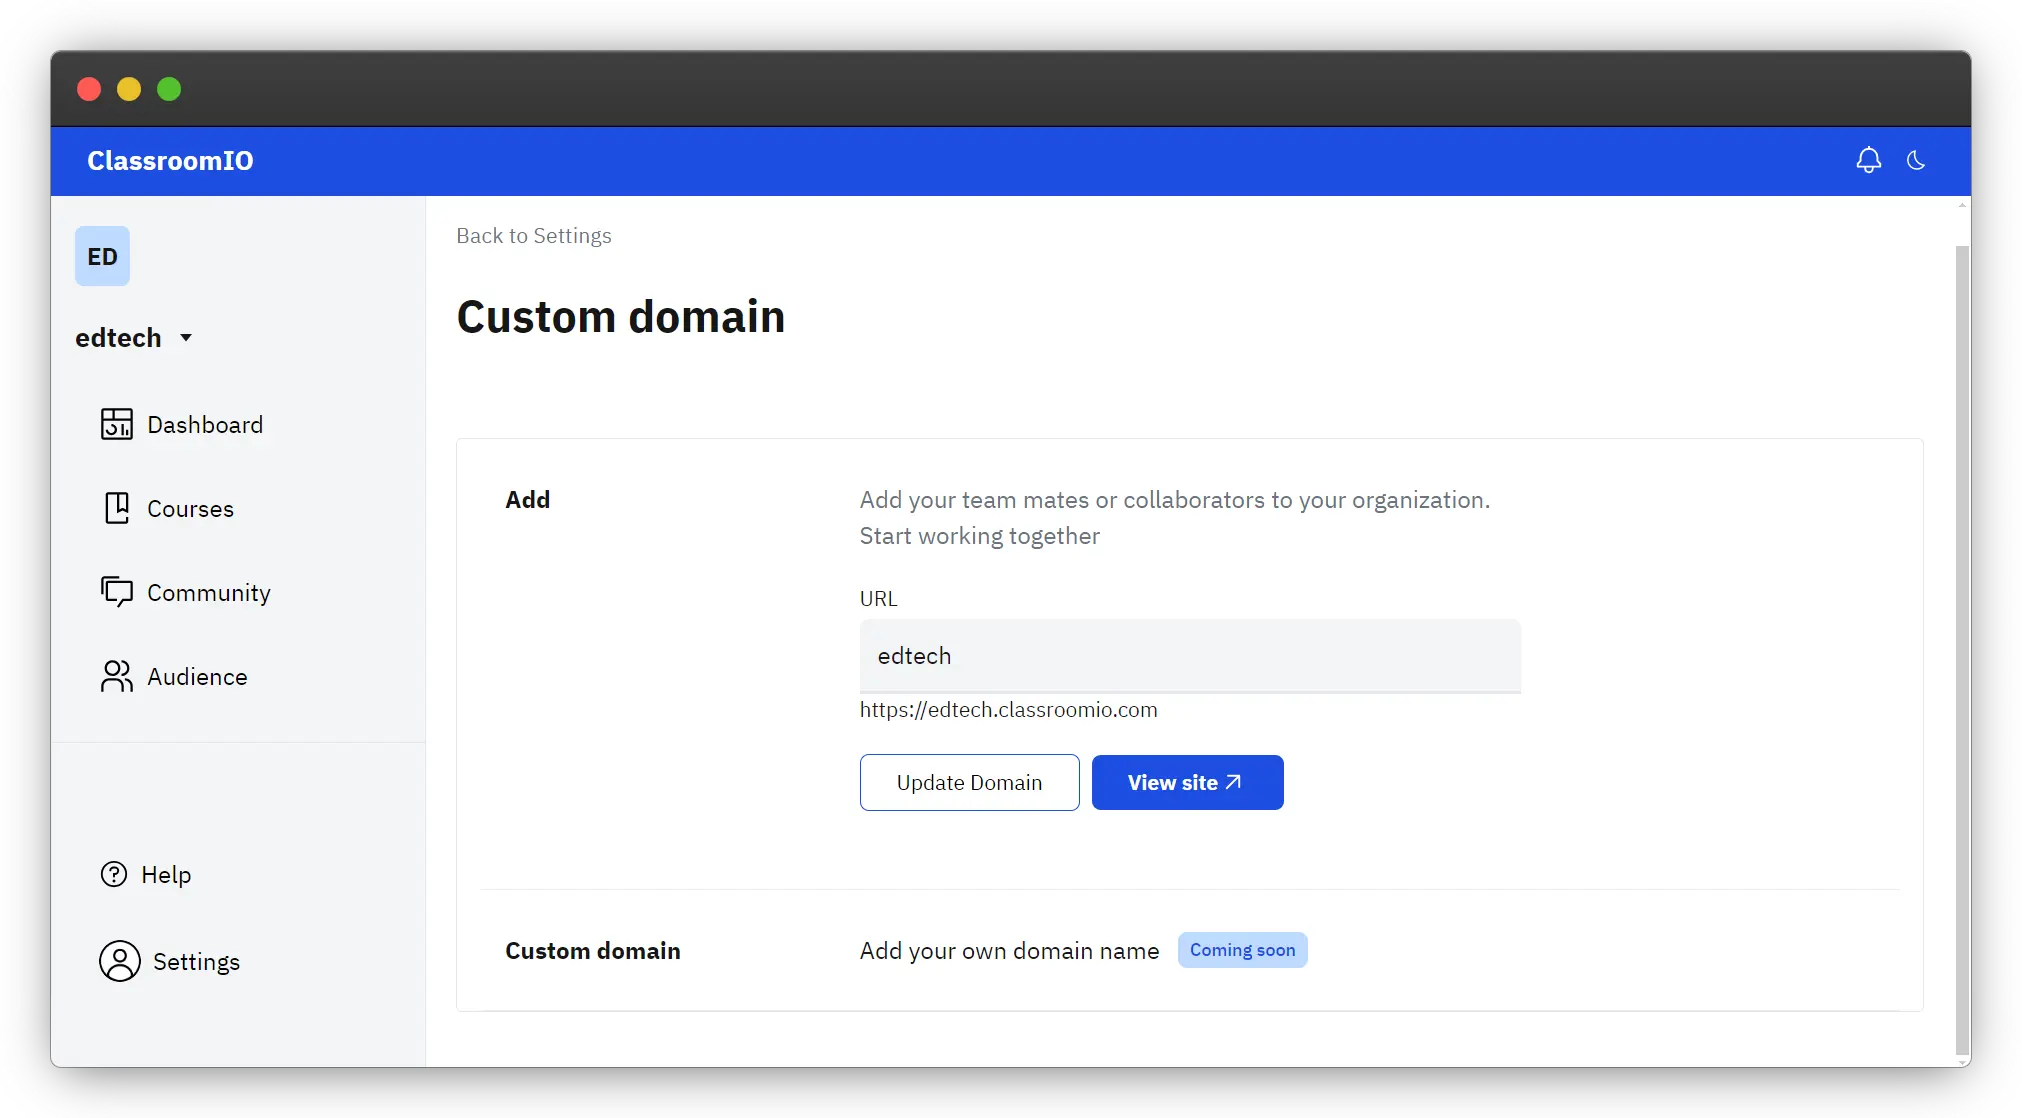 Edit Custom domain URL